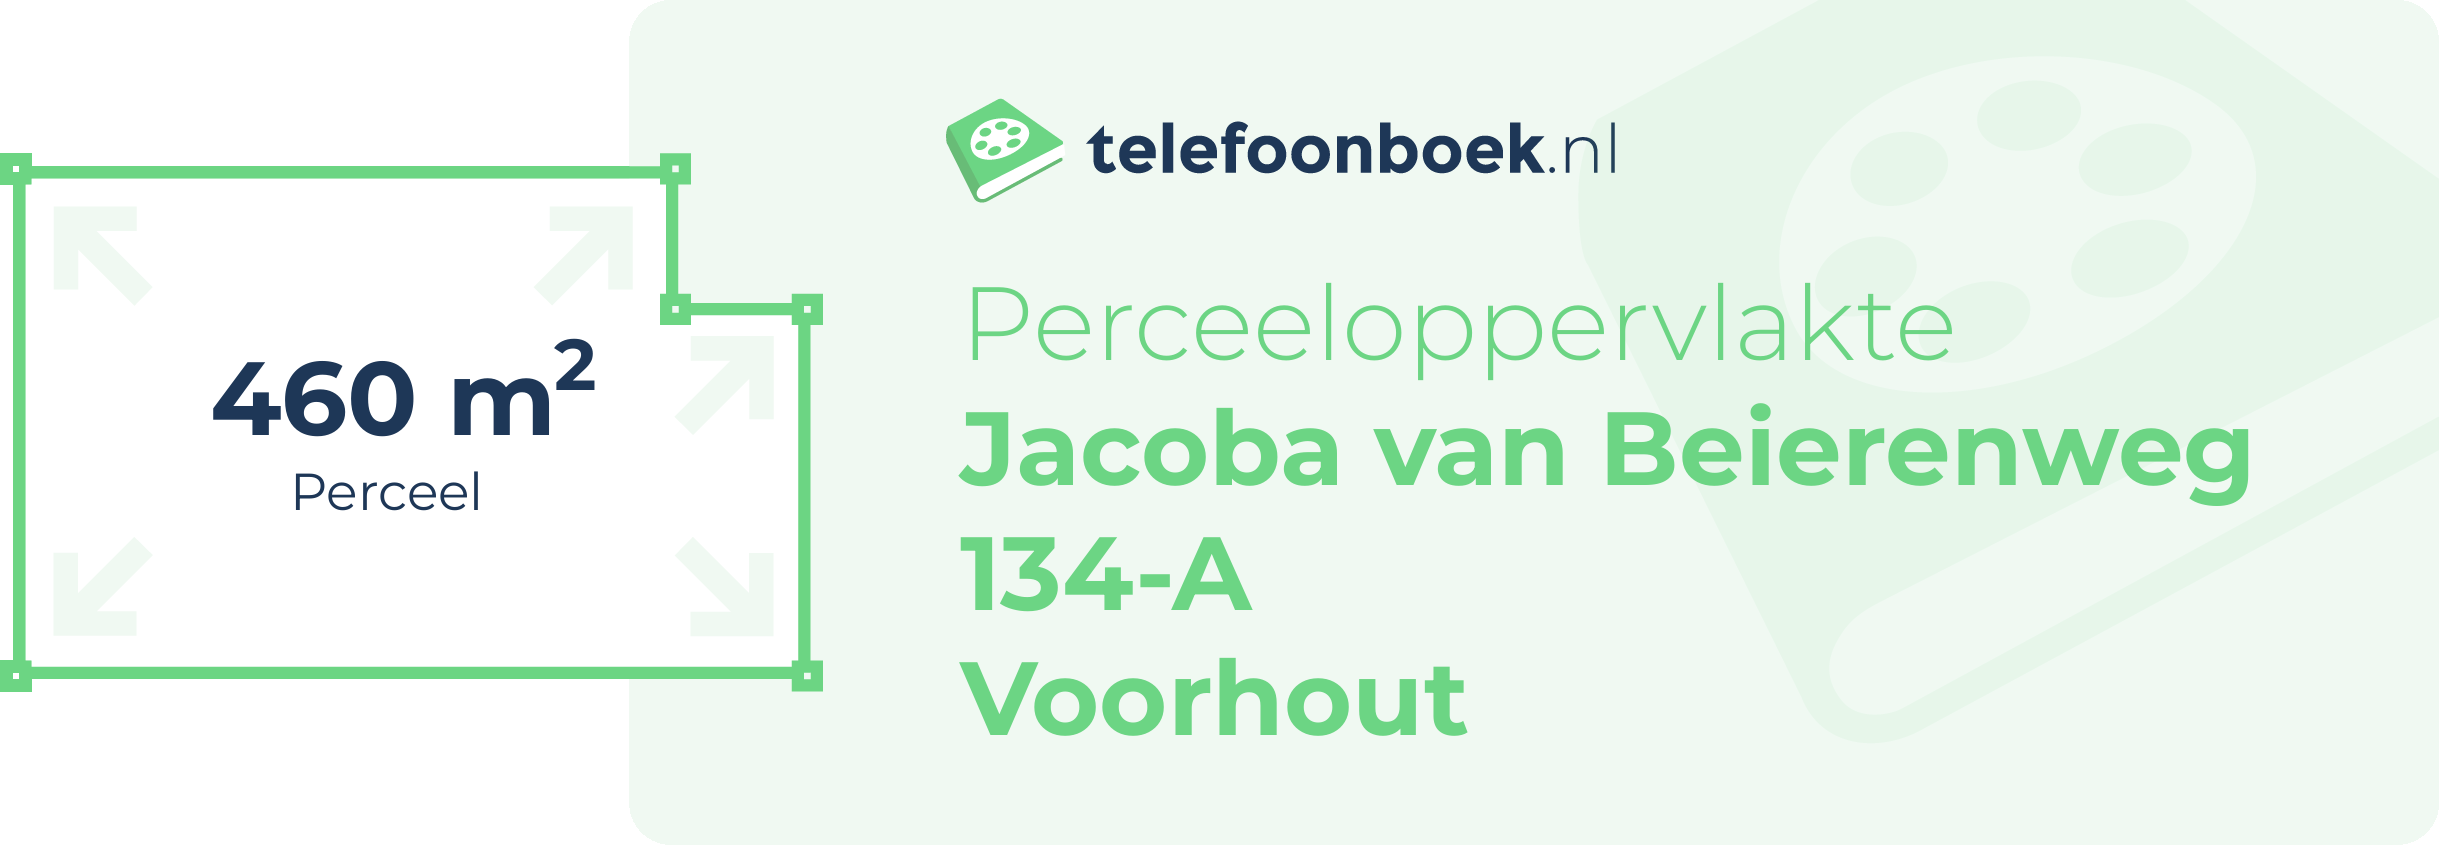 Perceeloppervlakte Jacoba Van Beierenweg 134-A Voorhout